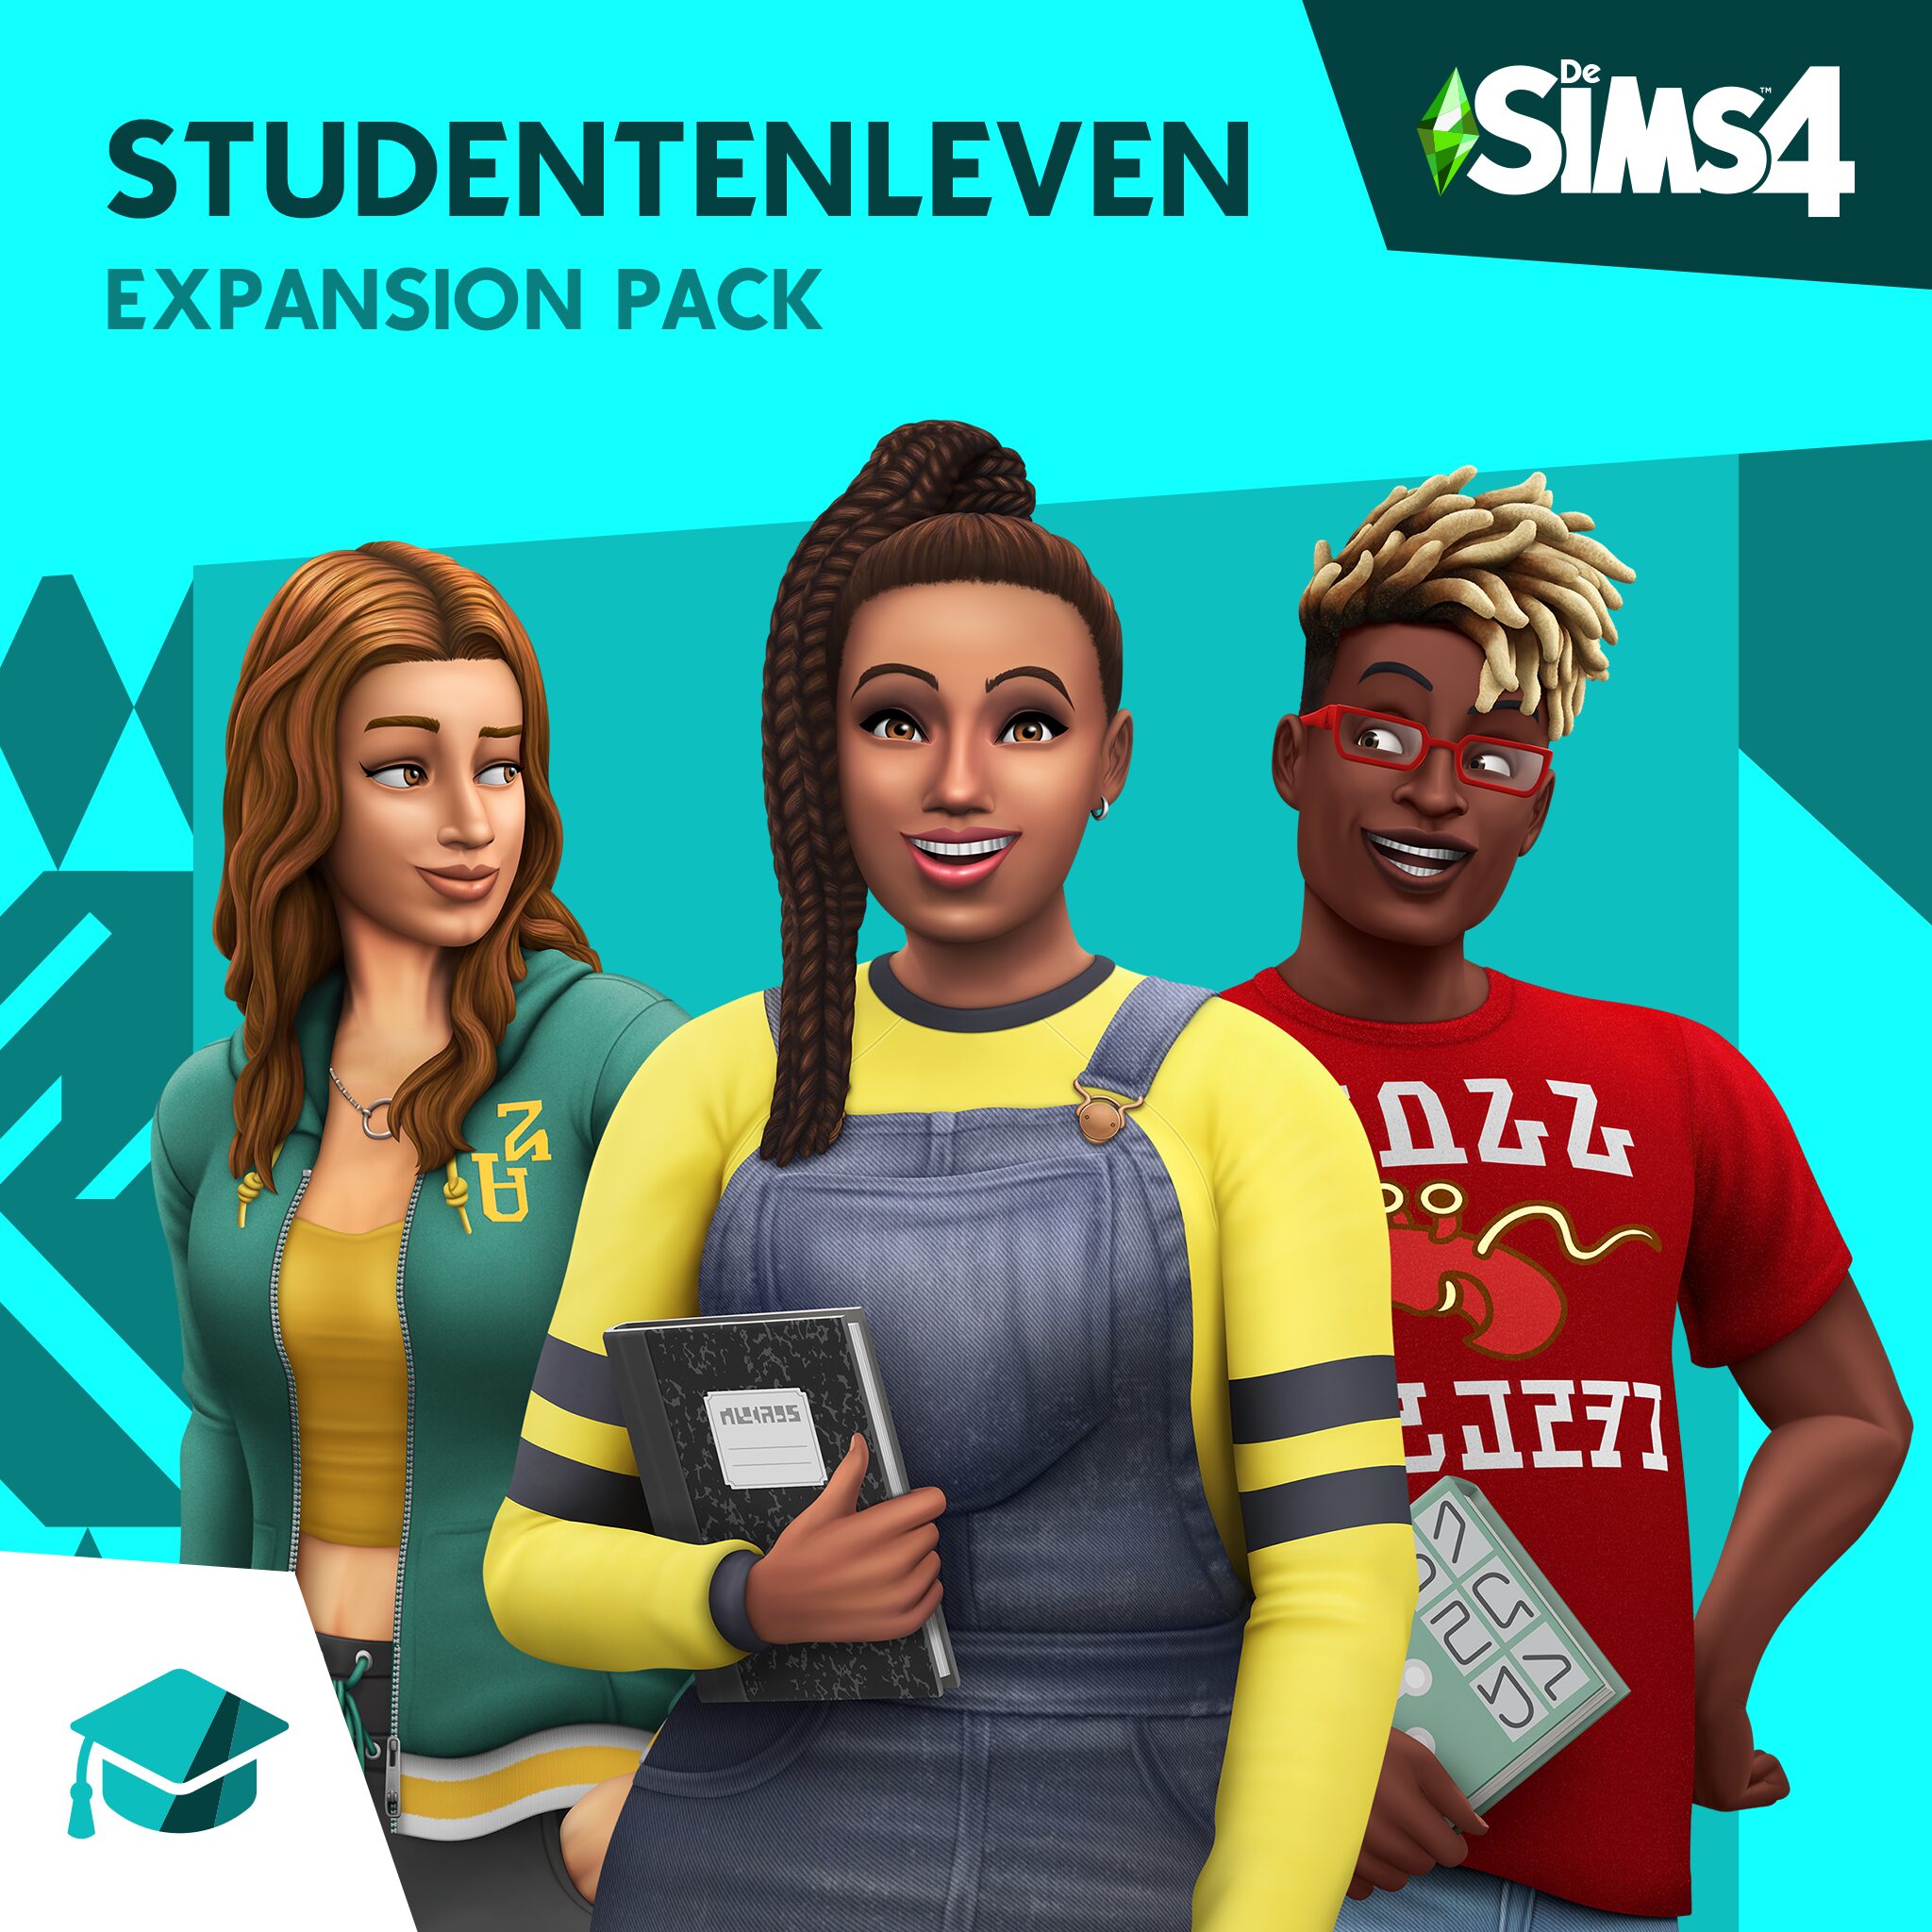 De Sims™ 4 Studentenleven